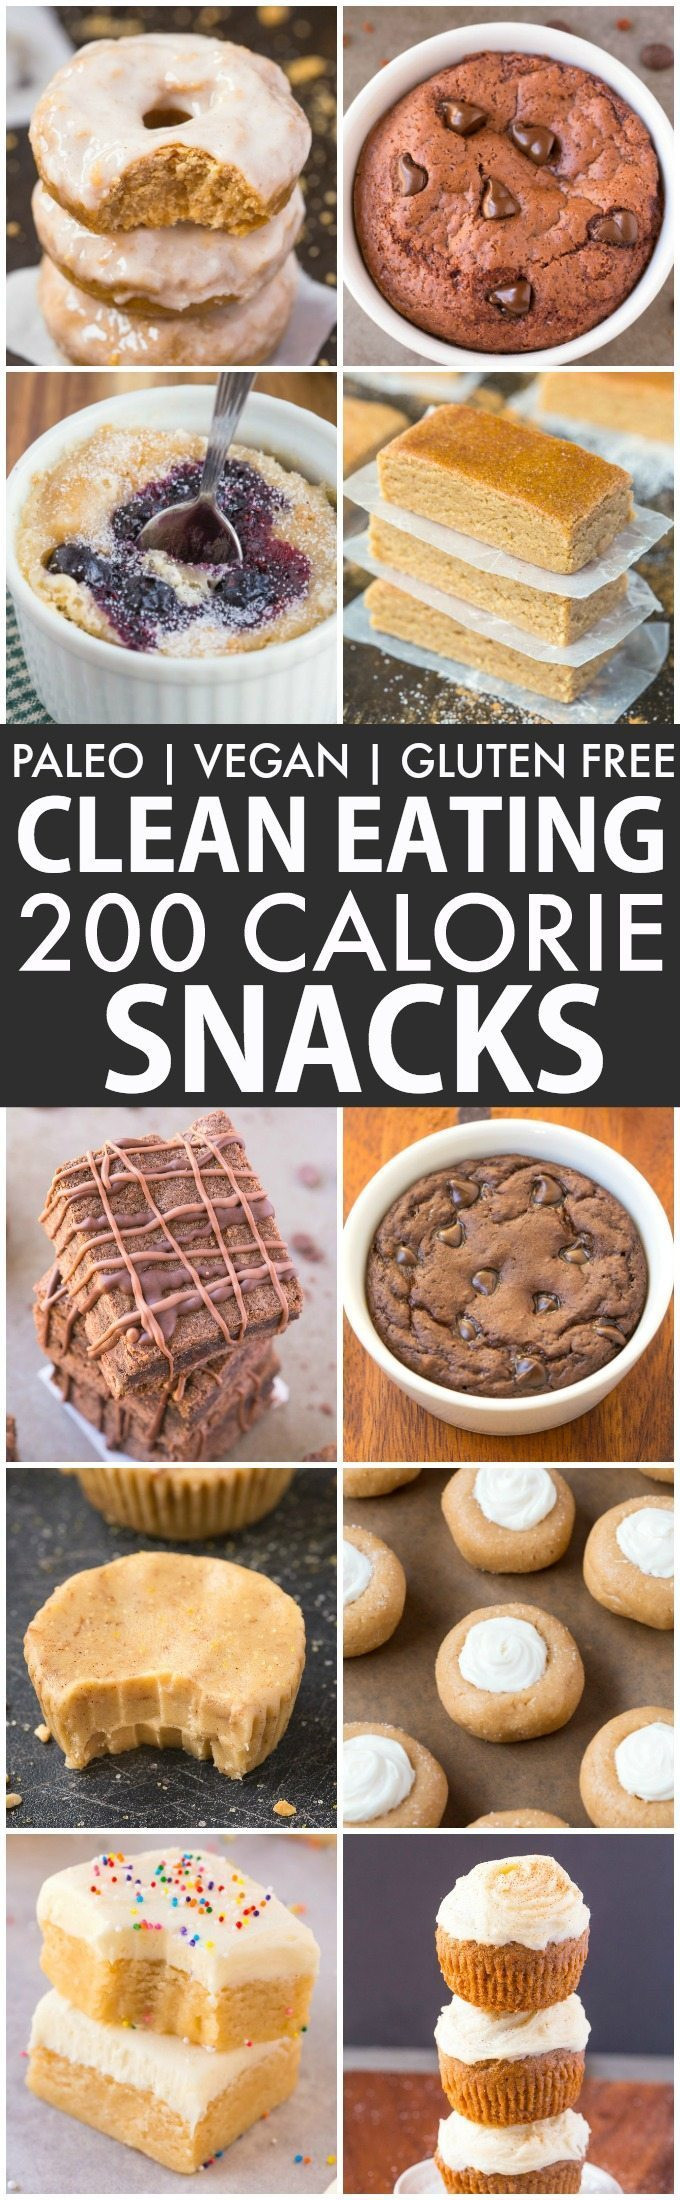 Healthy Snacks Under 200 Calories
 15 Healthy Desserts and Snacks Under 200 Calories